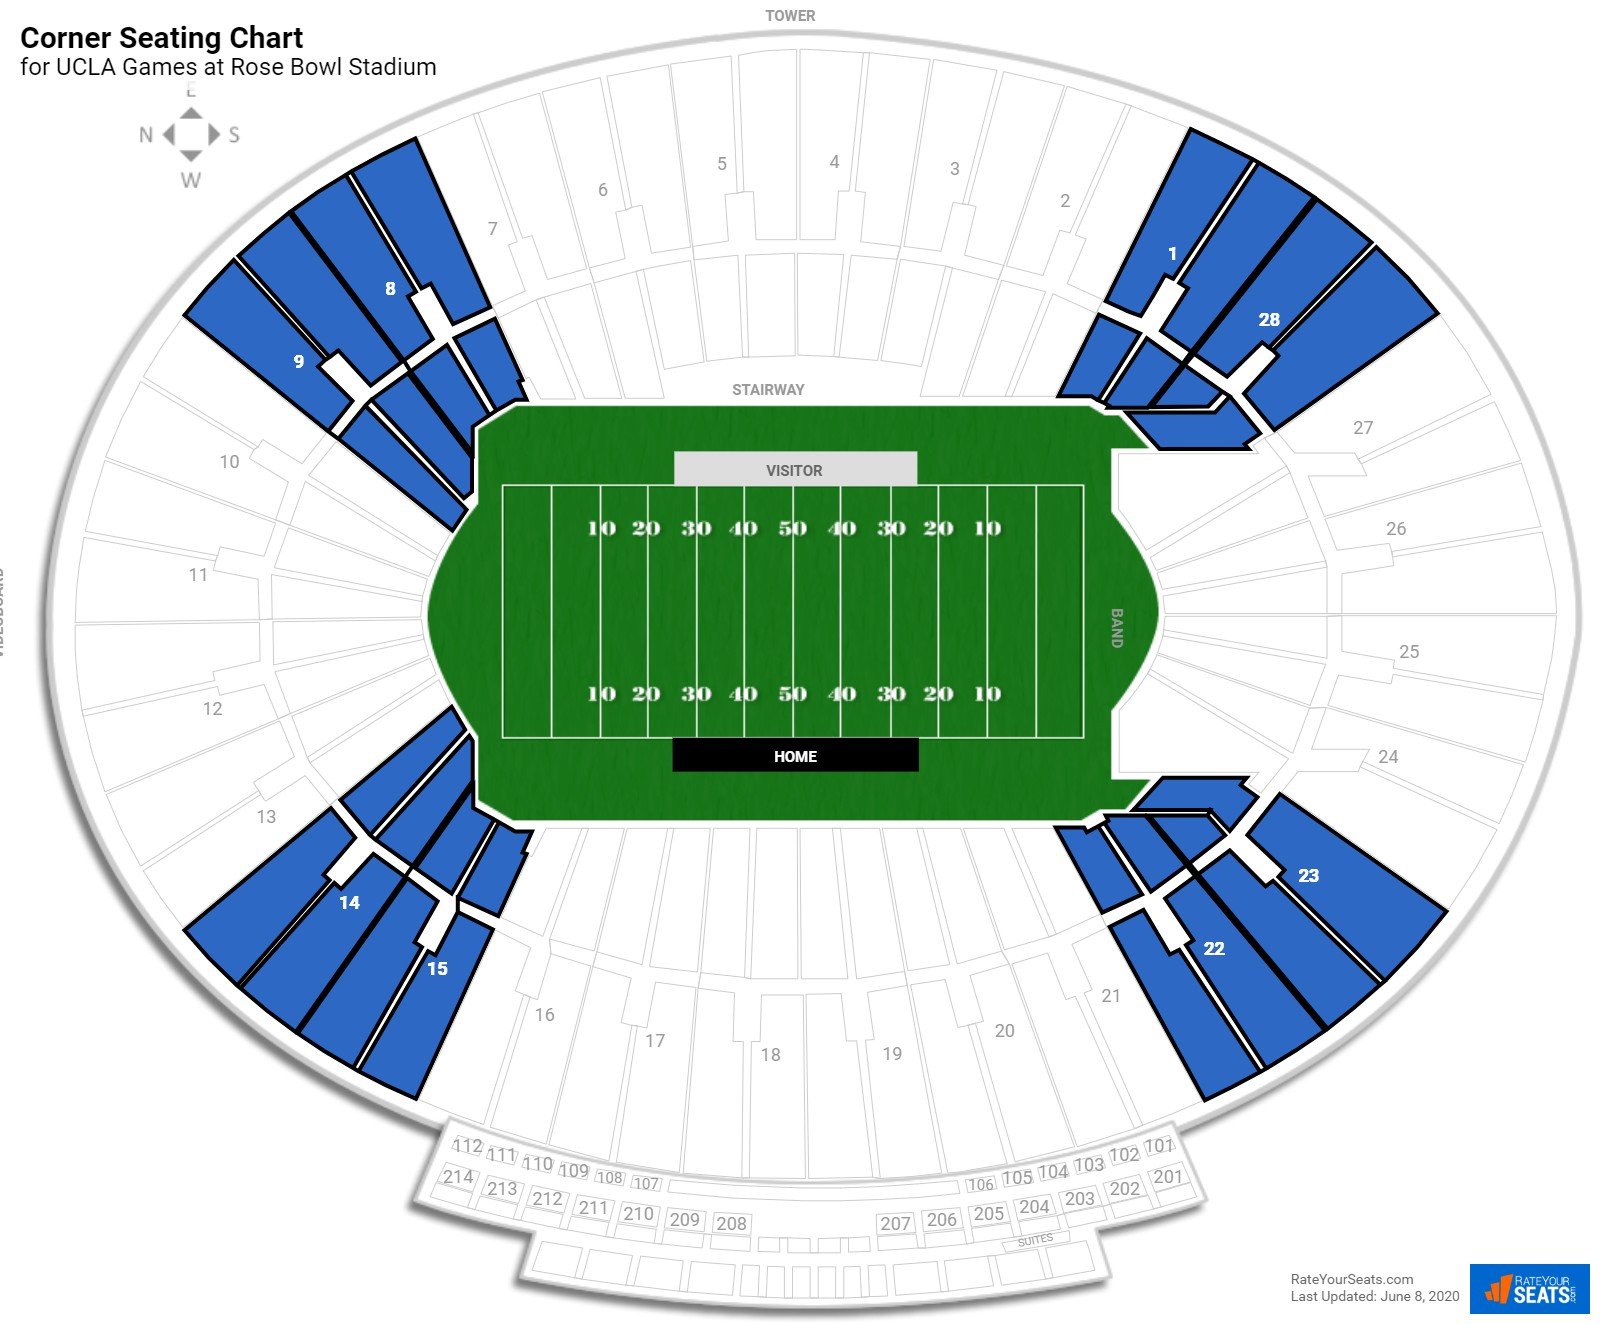 Corner - Rose Bowl Stadium Football Seating - RateYourSeats.com